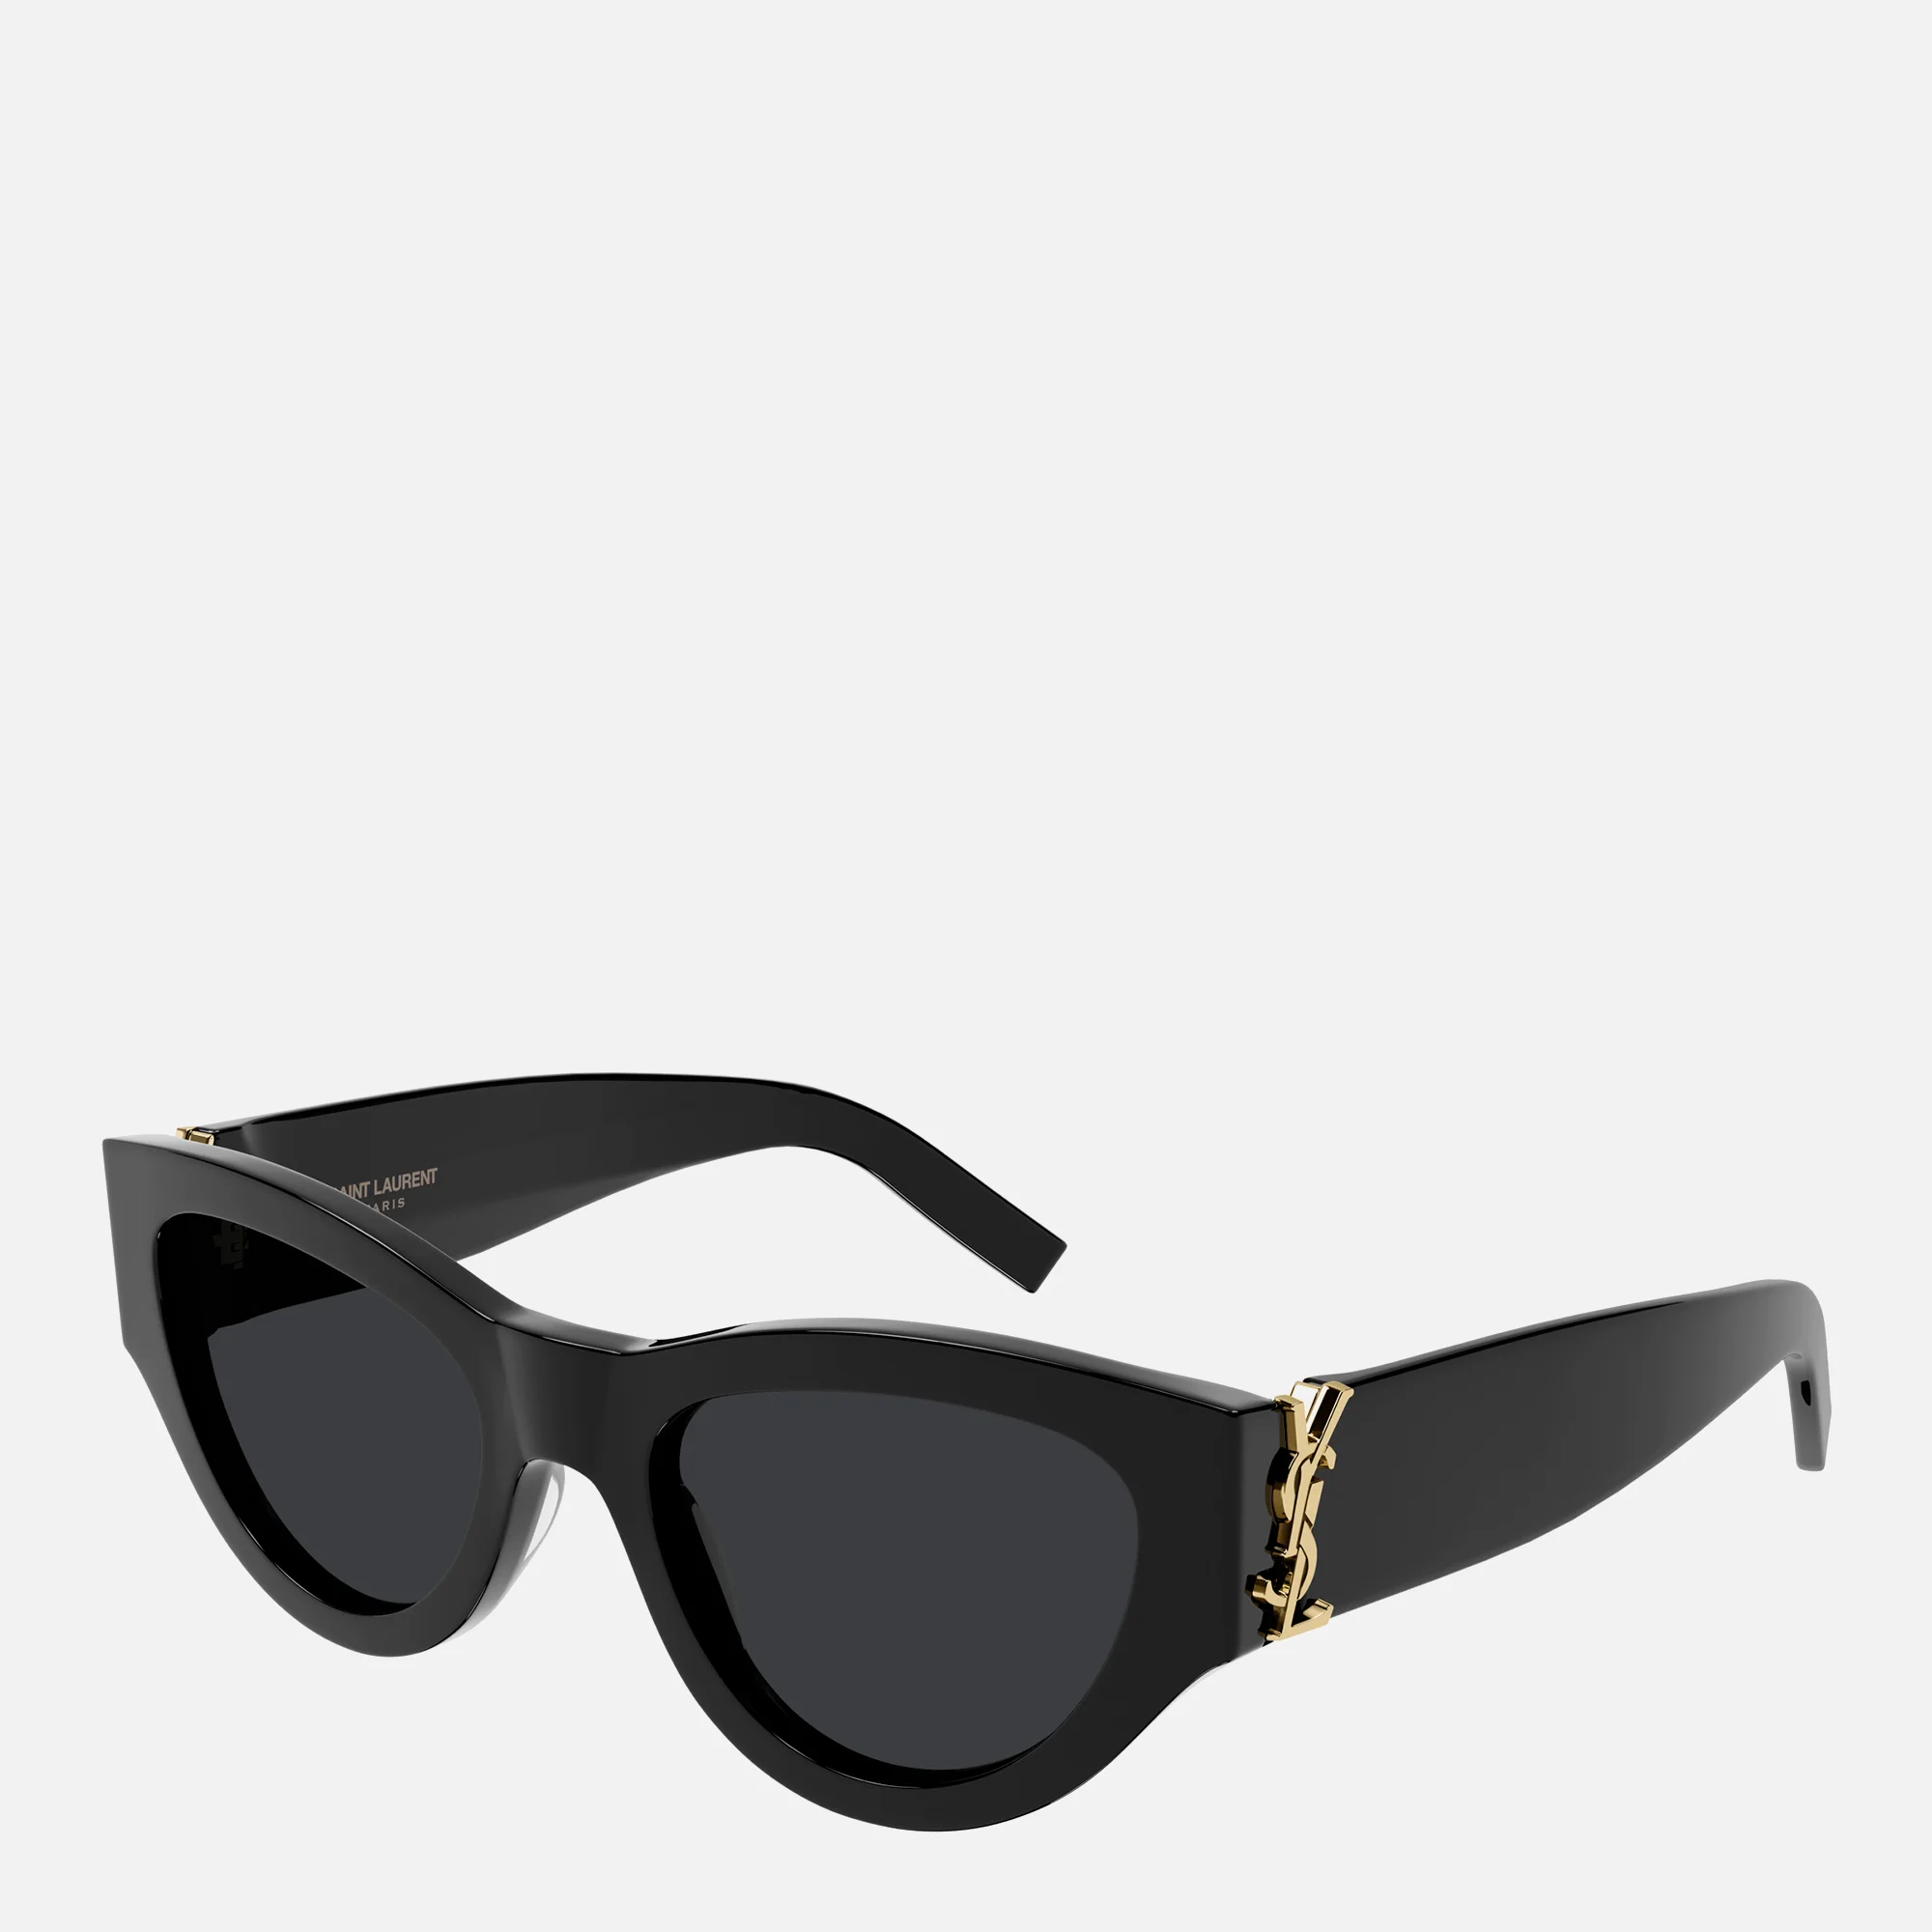 Saint Laurent Women's Cat Eye Sunglasses - Black Image 1